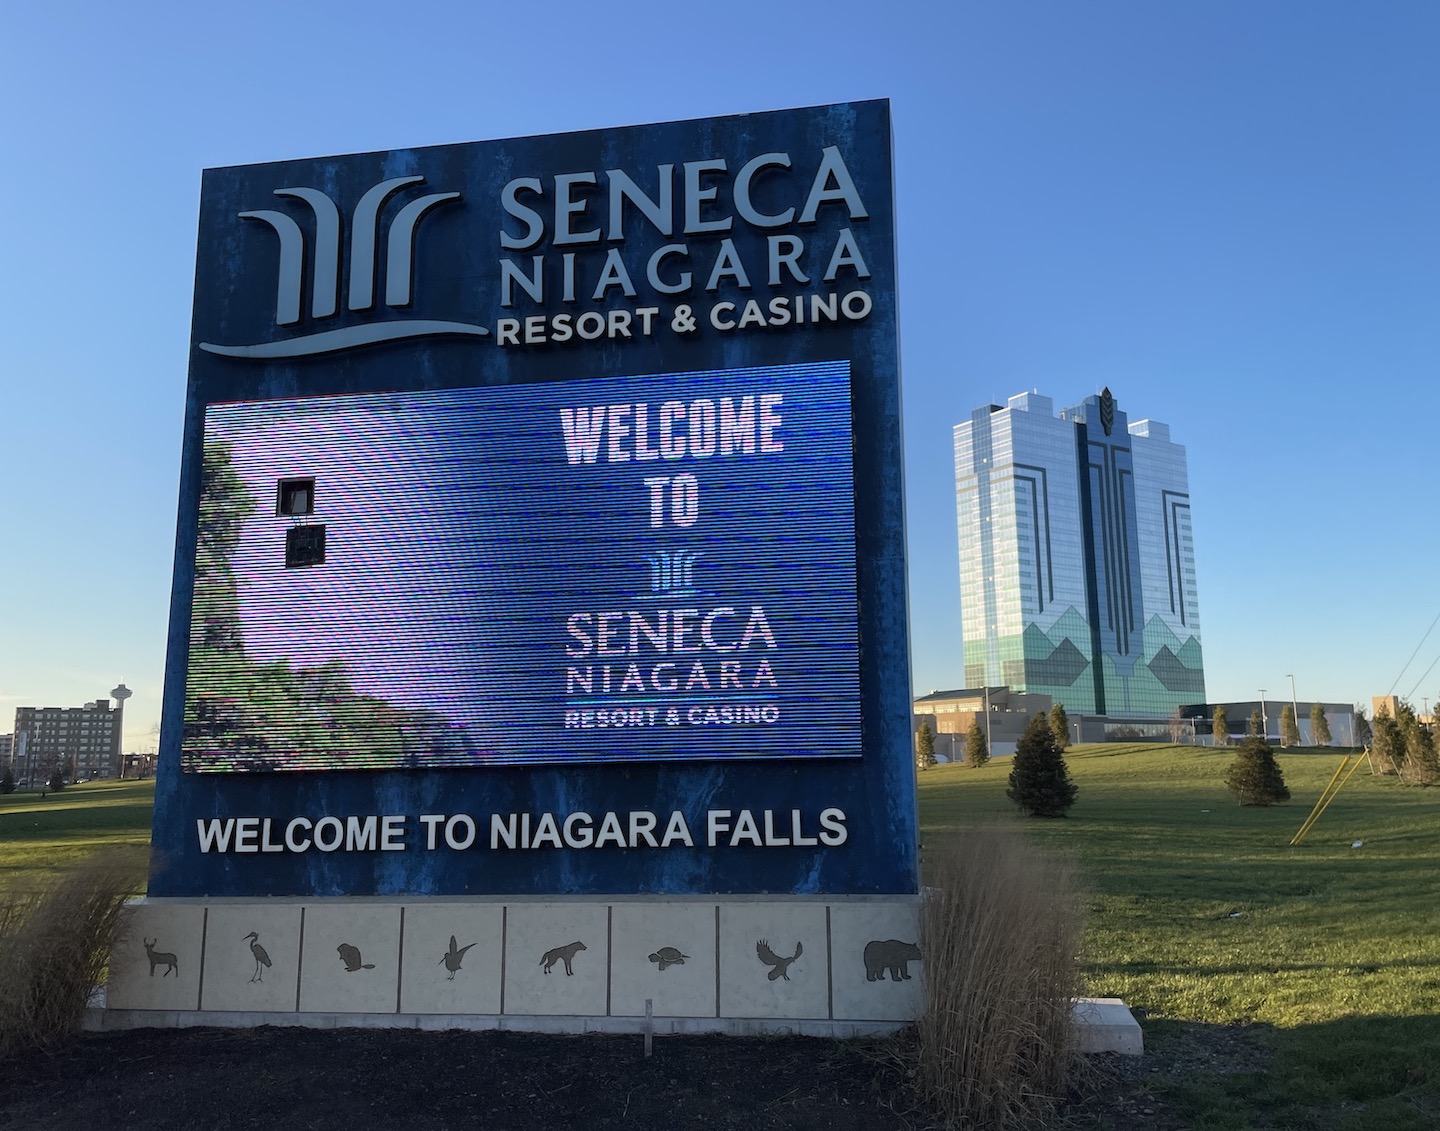 The sign points the way to Seneca Niagara Resort & Casino.